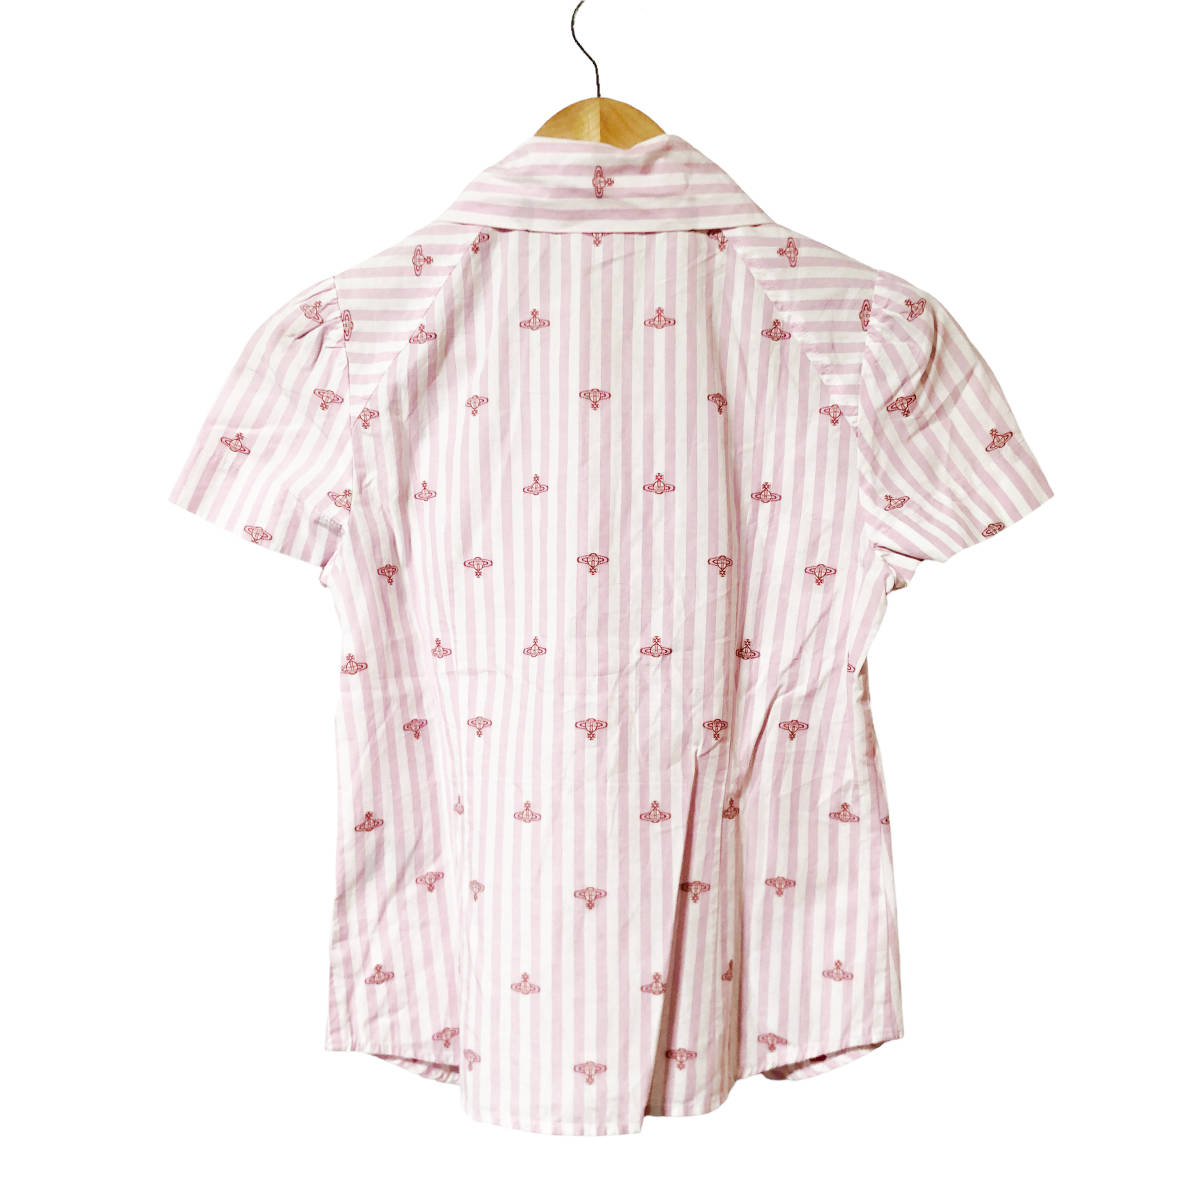 Vivienne Westwood RED LABEL ヴィヴィアンウエストウッド シャツ ブラウス オーブ 刺繍 総柄 半袖 ストライプ 1 白 ピンク レディース A22_画像2